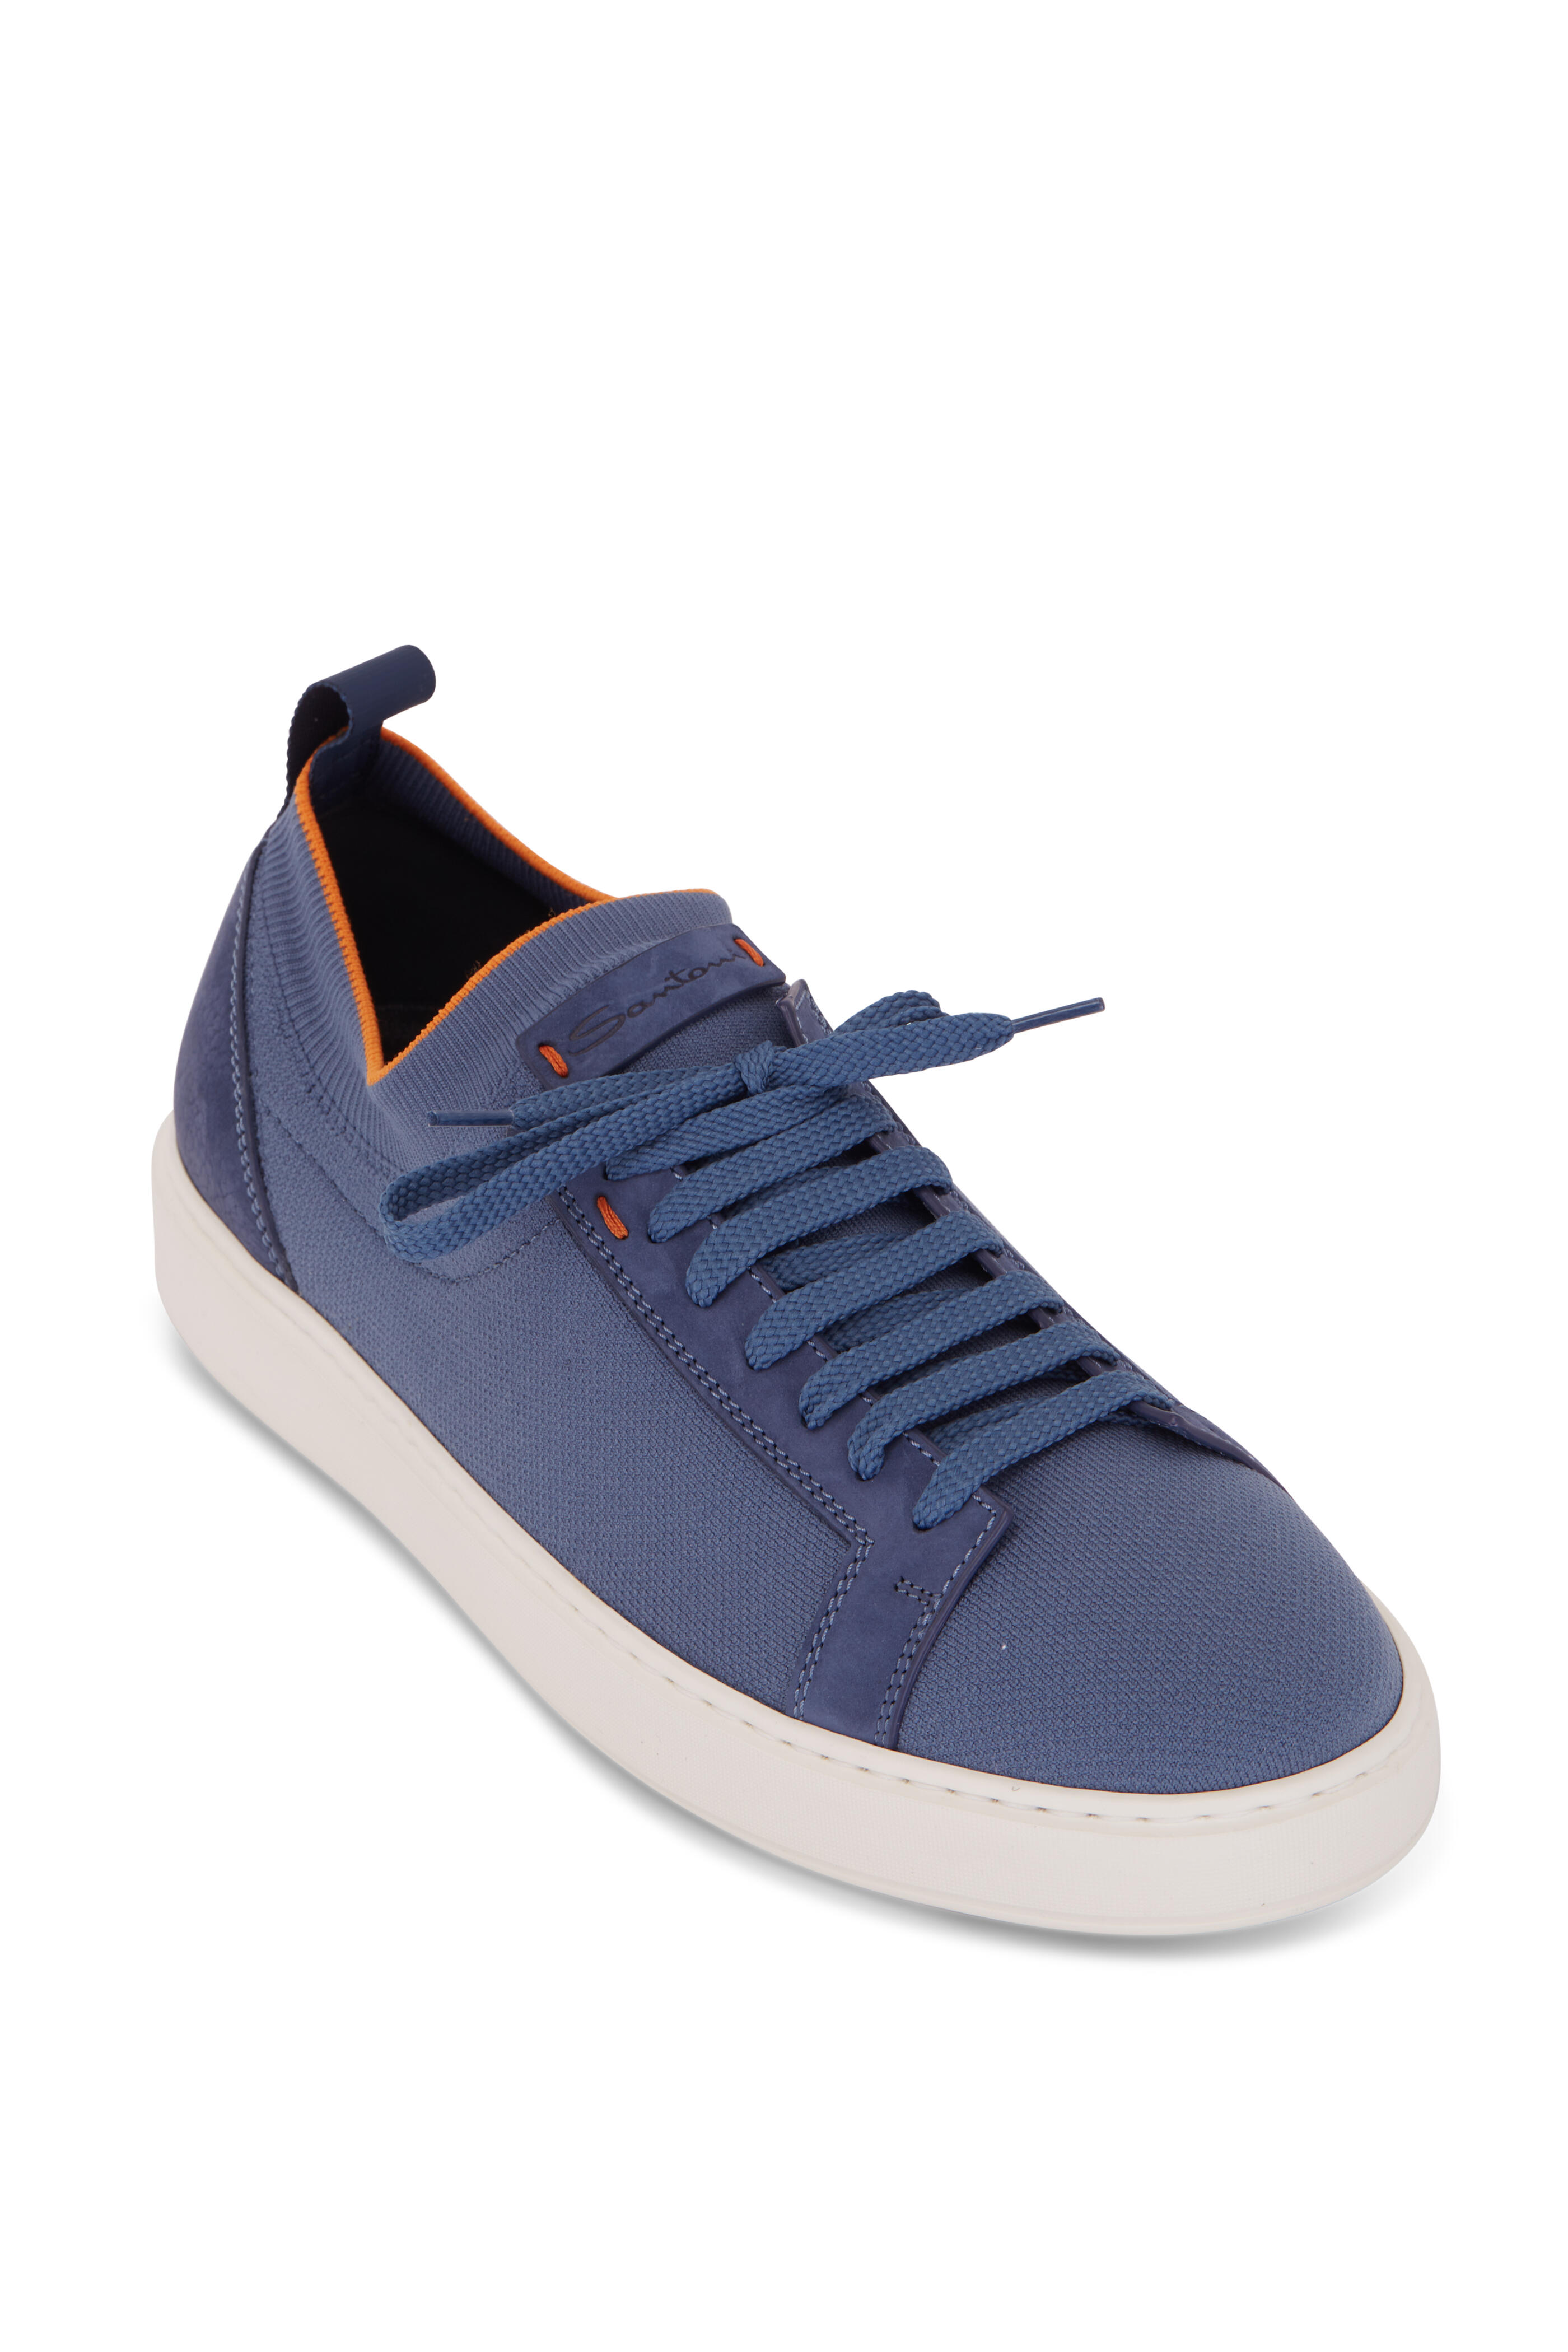 Model Sulier shoe, manufactured blue canasta- teji corks